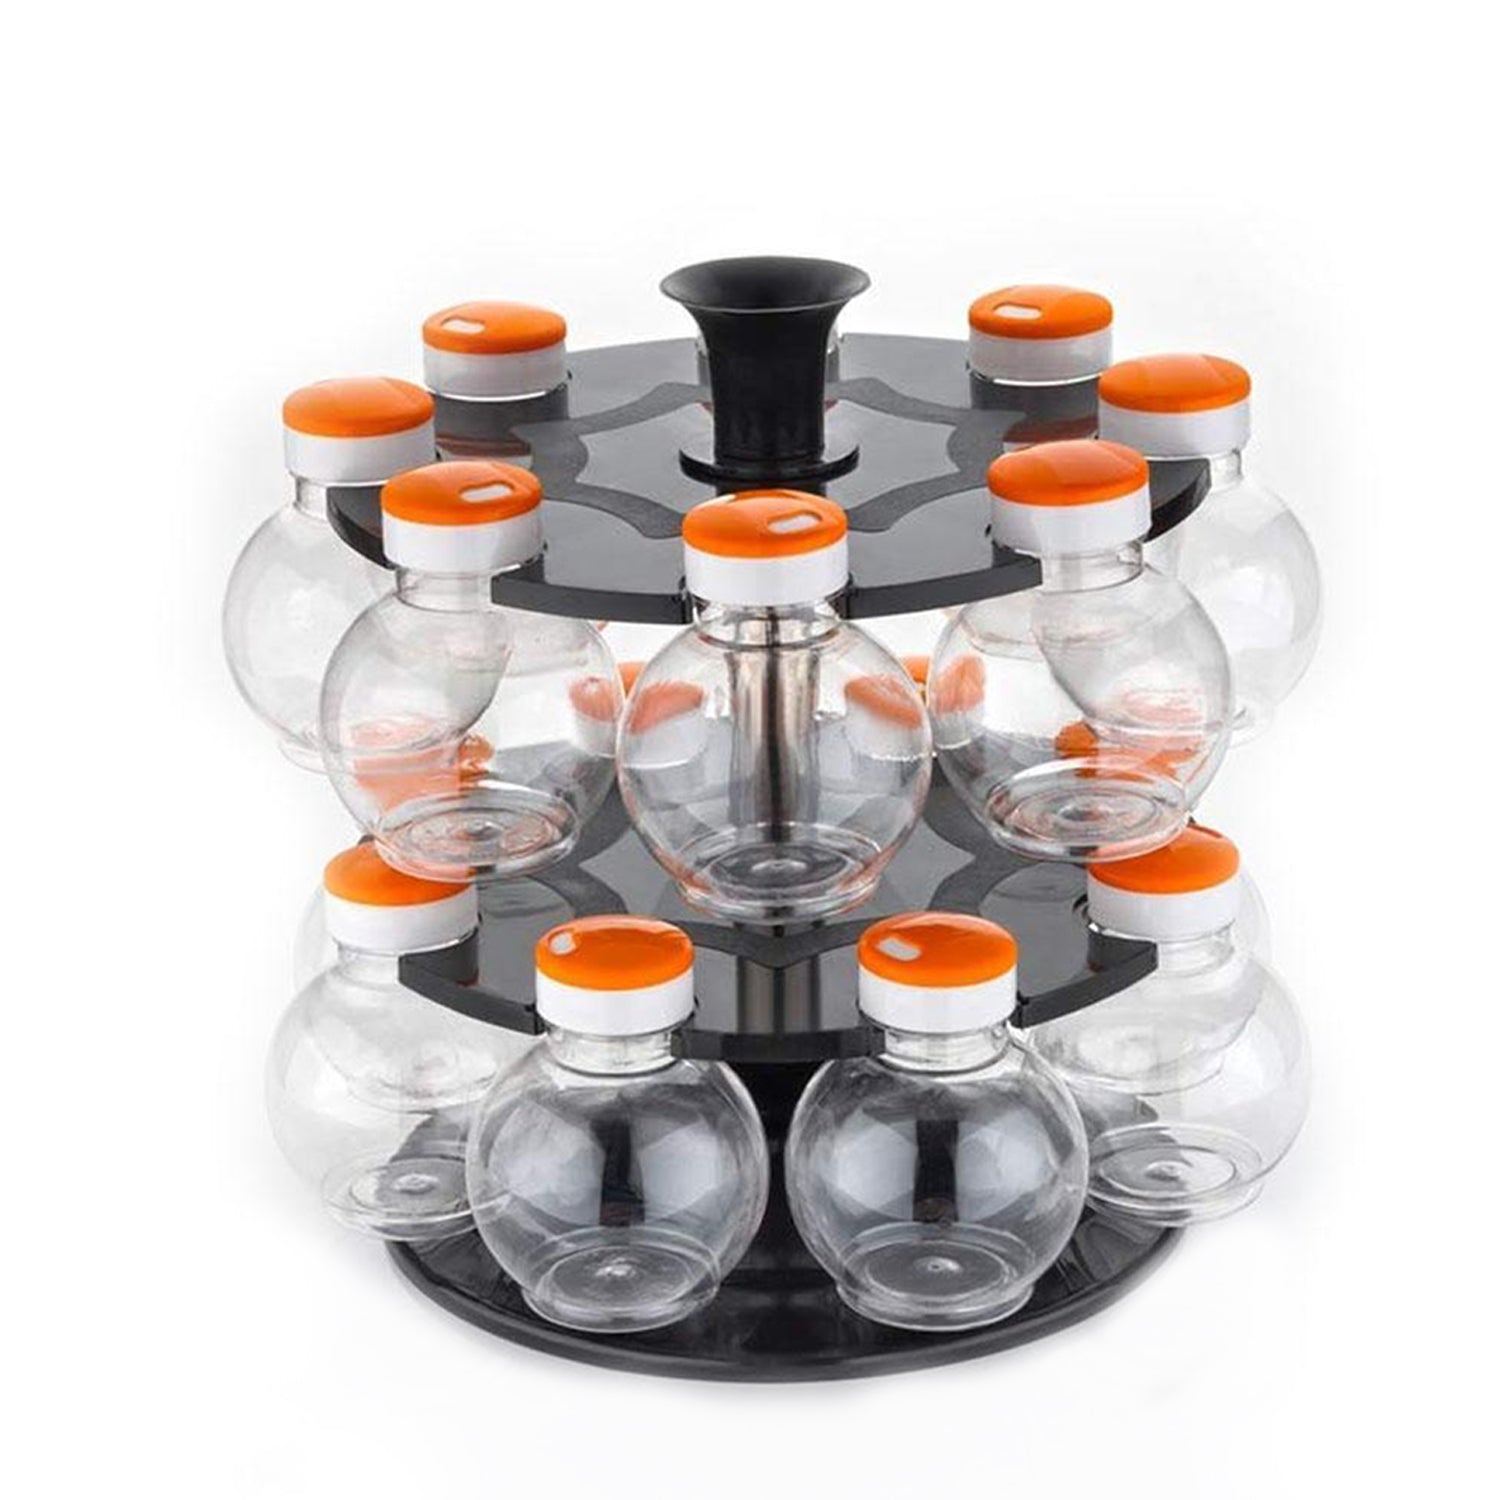 2015 Designer Multipurpose Jumbo Revolving Plastic Spice Rack 16 Piece Condiment Set